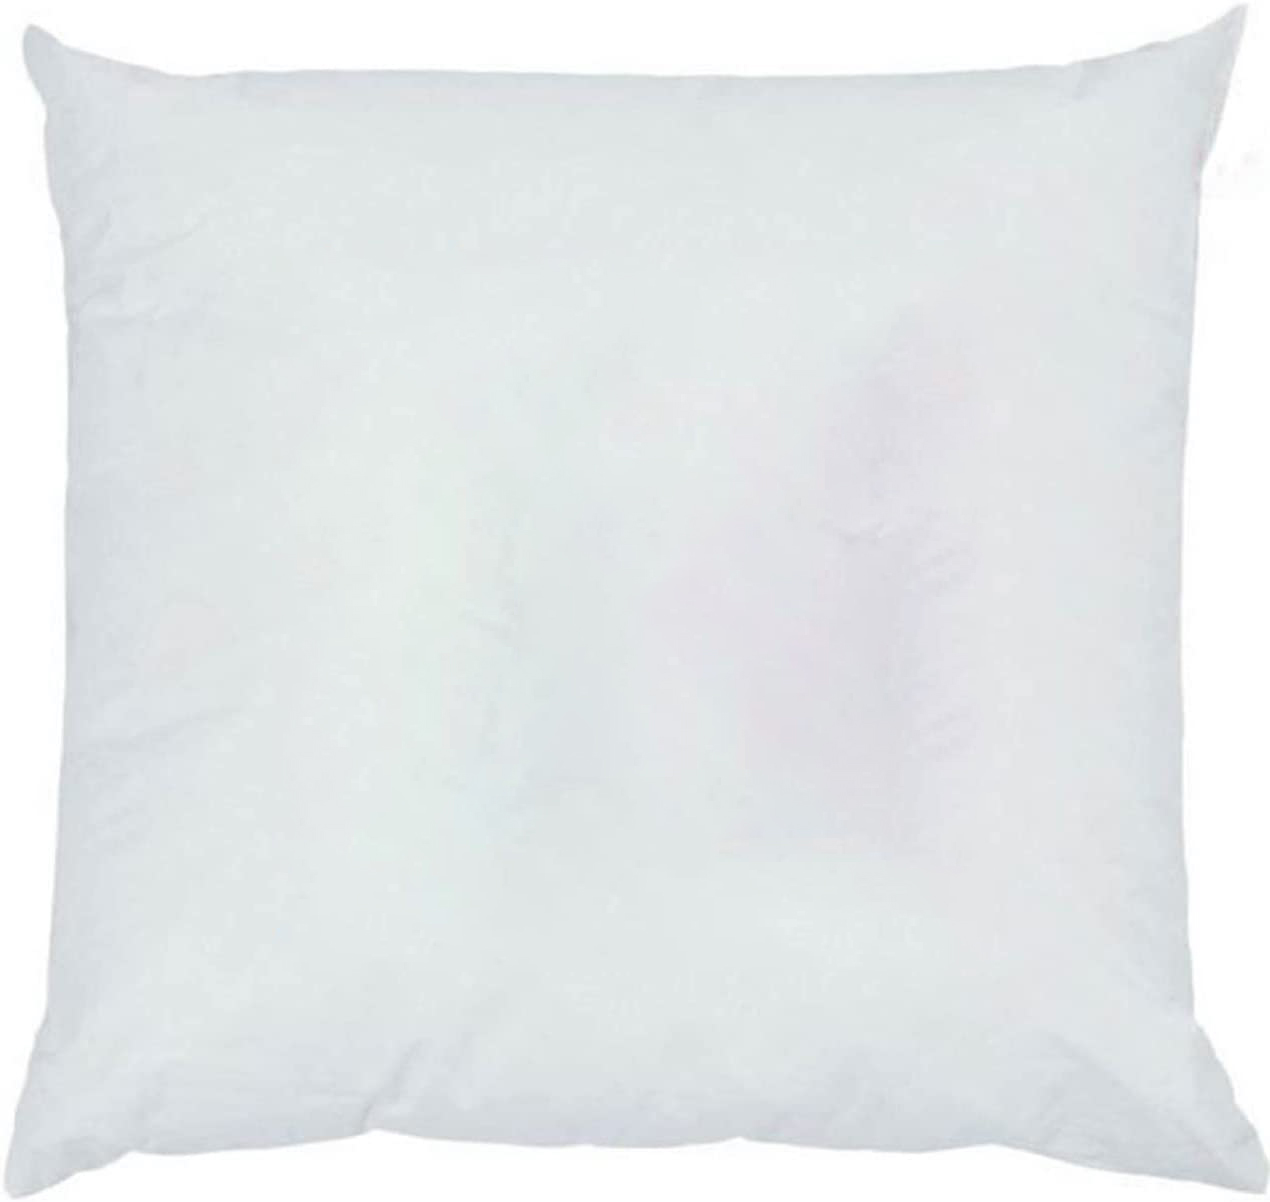 Customize Pillowcase